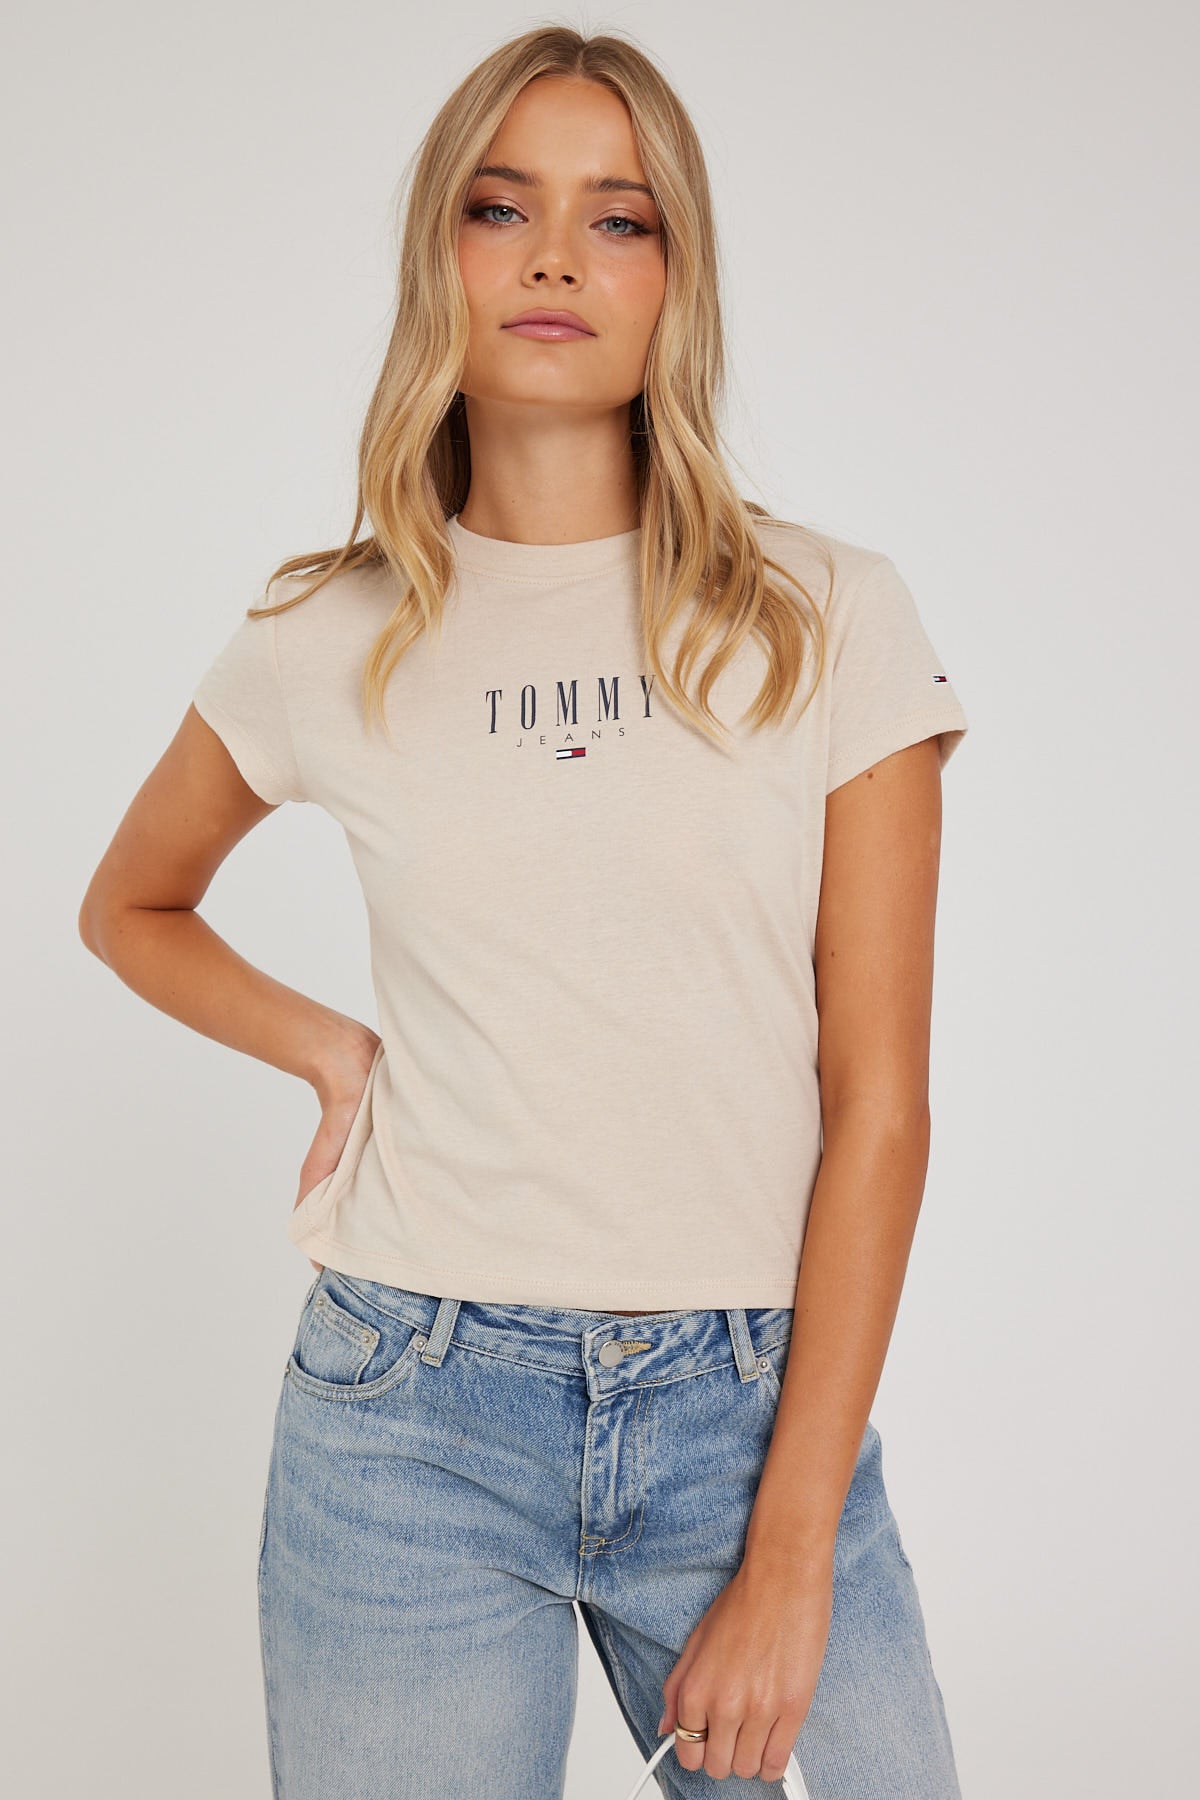 Store Serif Green Sleeve Universal Jeans Baby Tee – Short TJW Tommy Coastal Linear